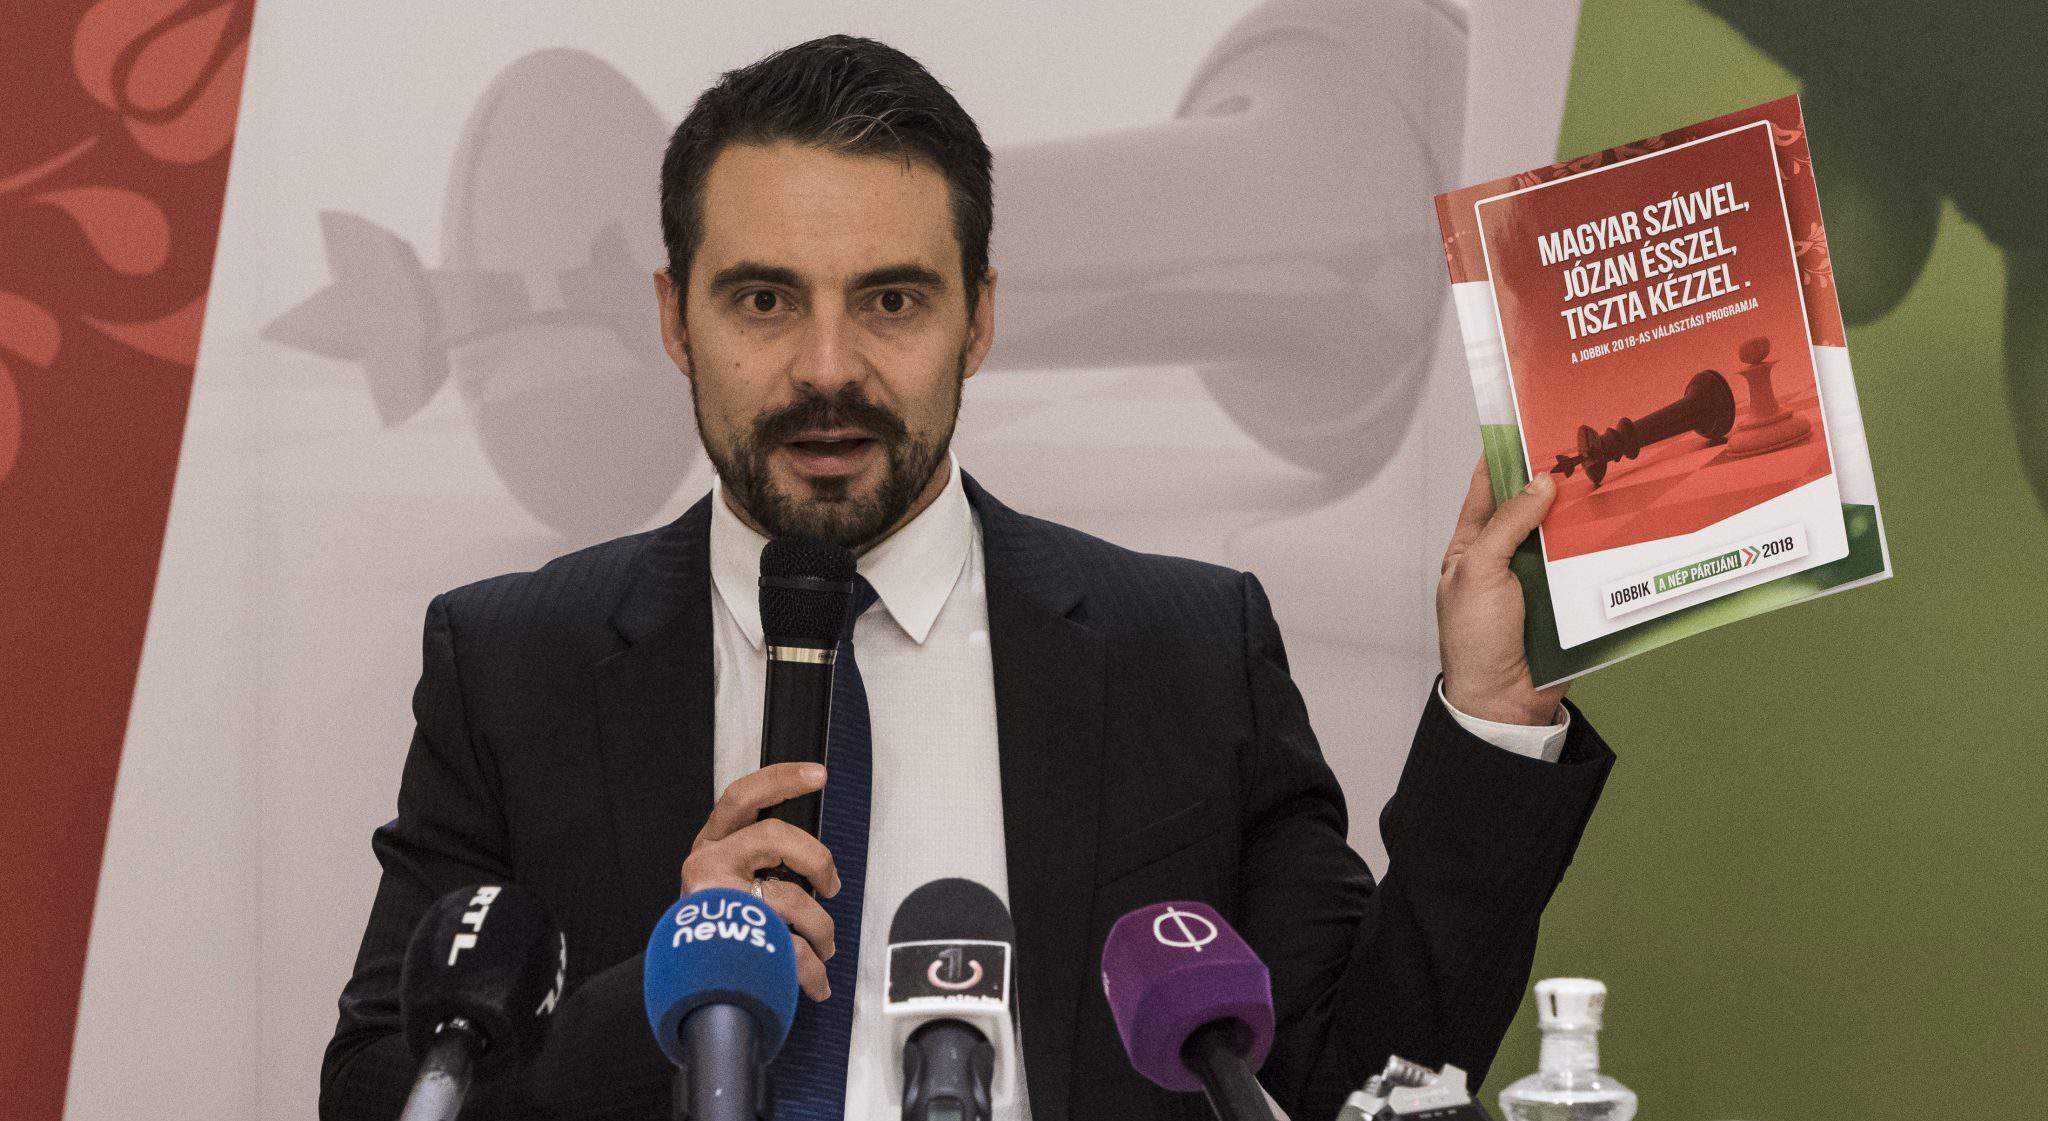 Jobbik's PM Gábor won like-competition - Daily News Hungary